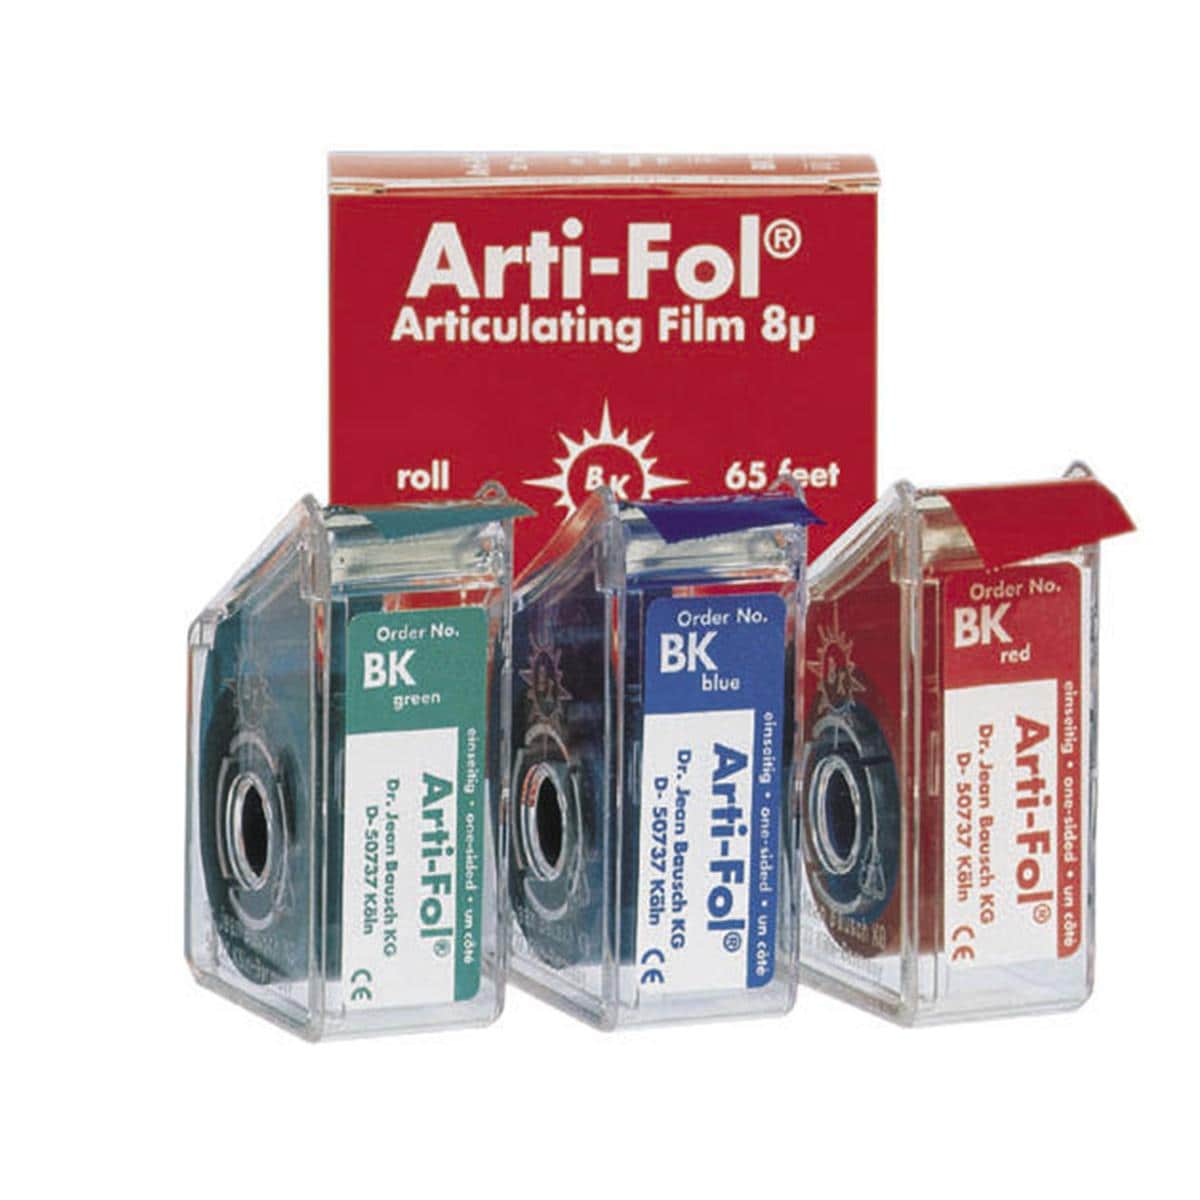 Arti-Fol enkelzijdig, 8 micron - BK21, rood in dispenserbox